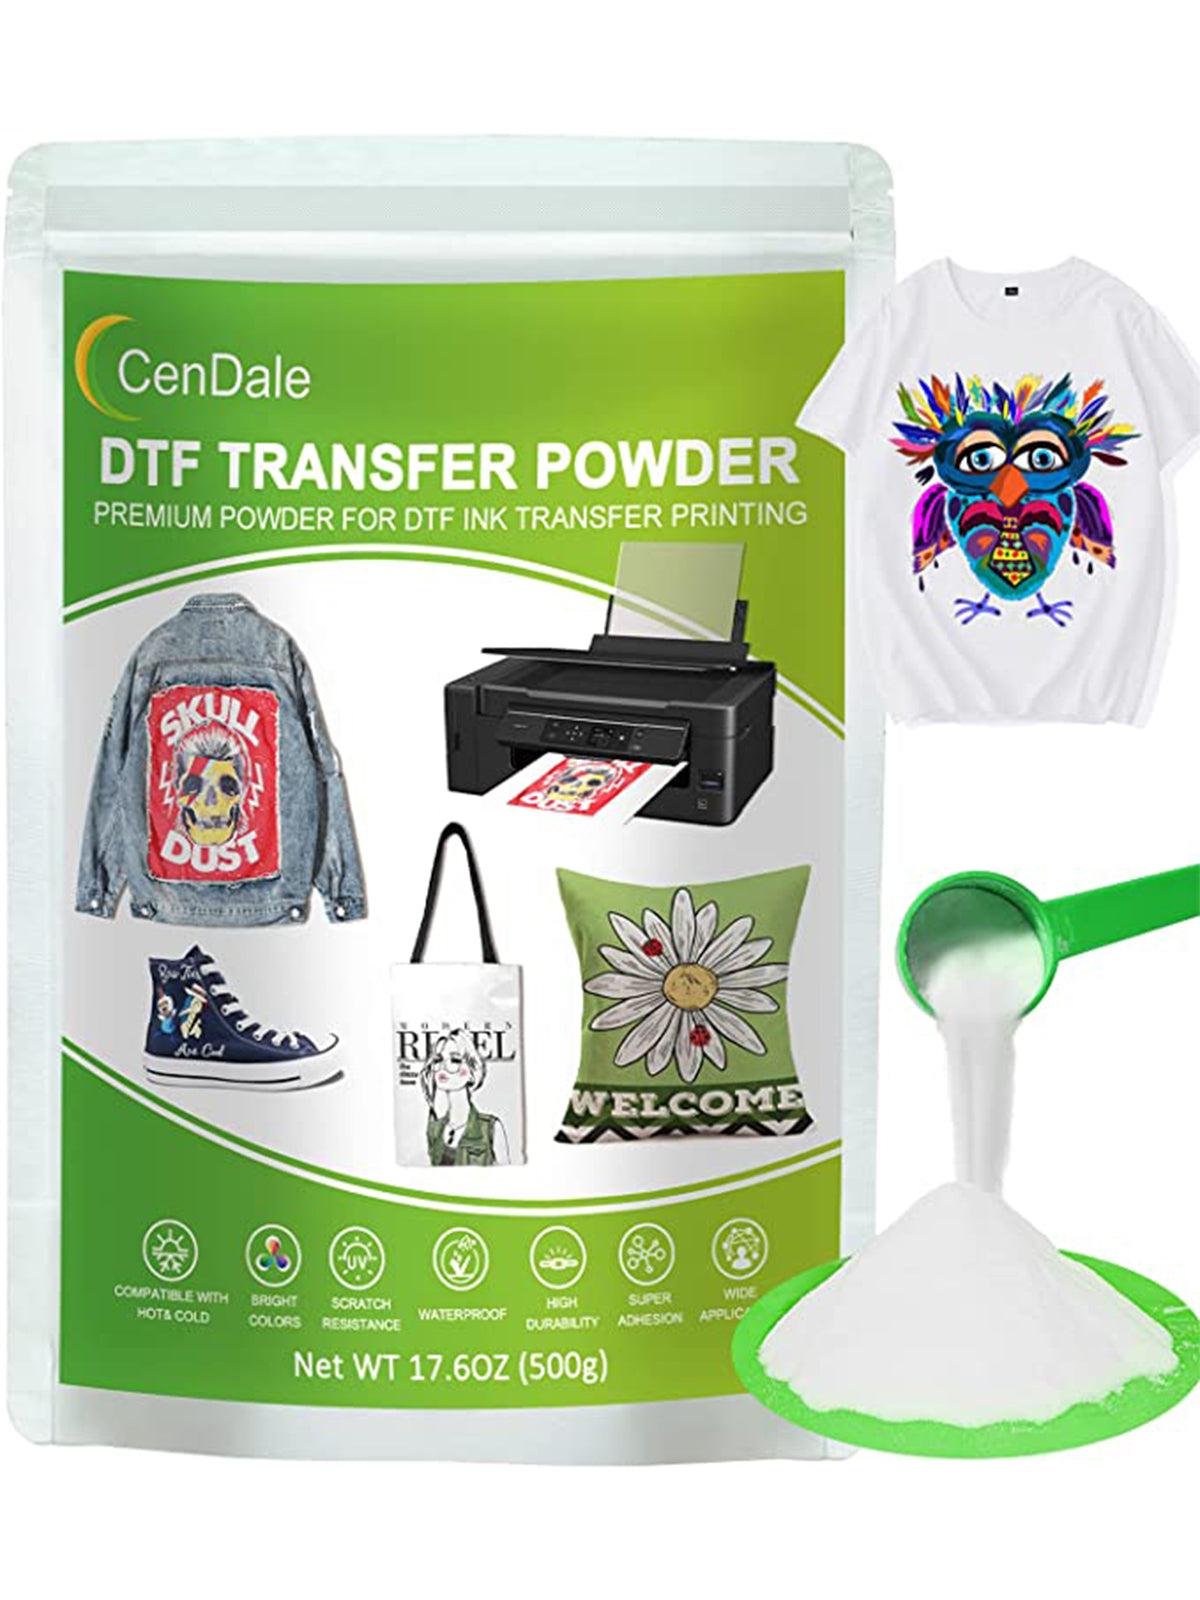 CenDale DTF Powder 500g - White Hot Melt Adhesive DTF Transfer Powder